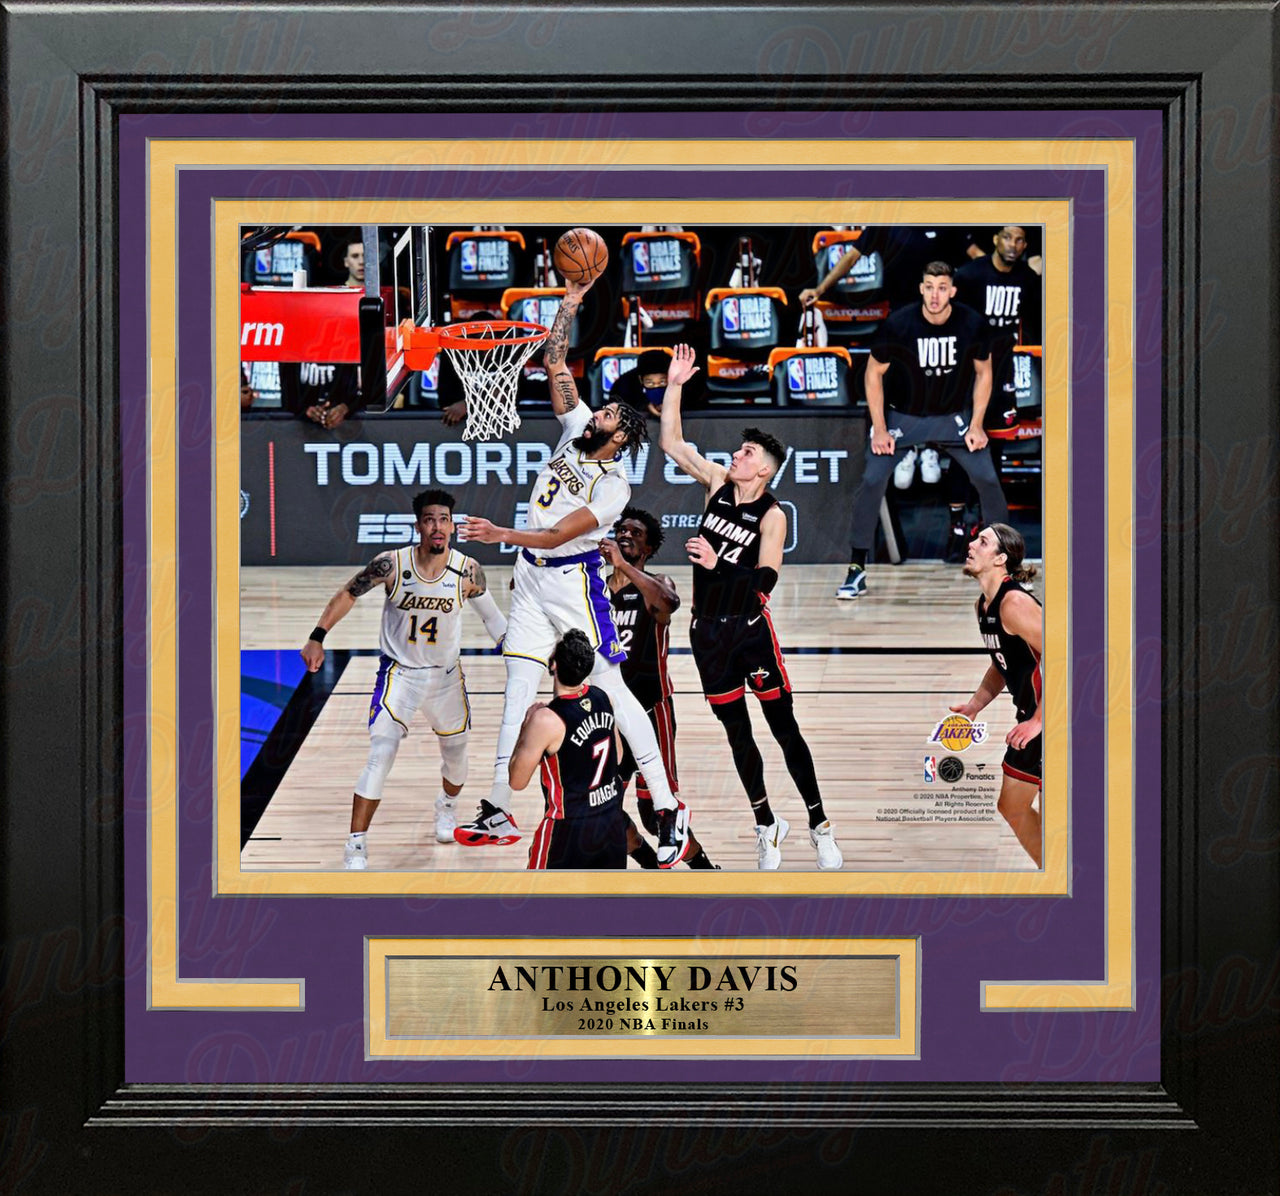 Anthony Davis 2020 NBA Finals Slam Dunk Los Angeles Lakers 8" x 10" Framed Basketball Photo - Dynasty Sports & Framing 